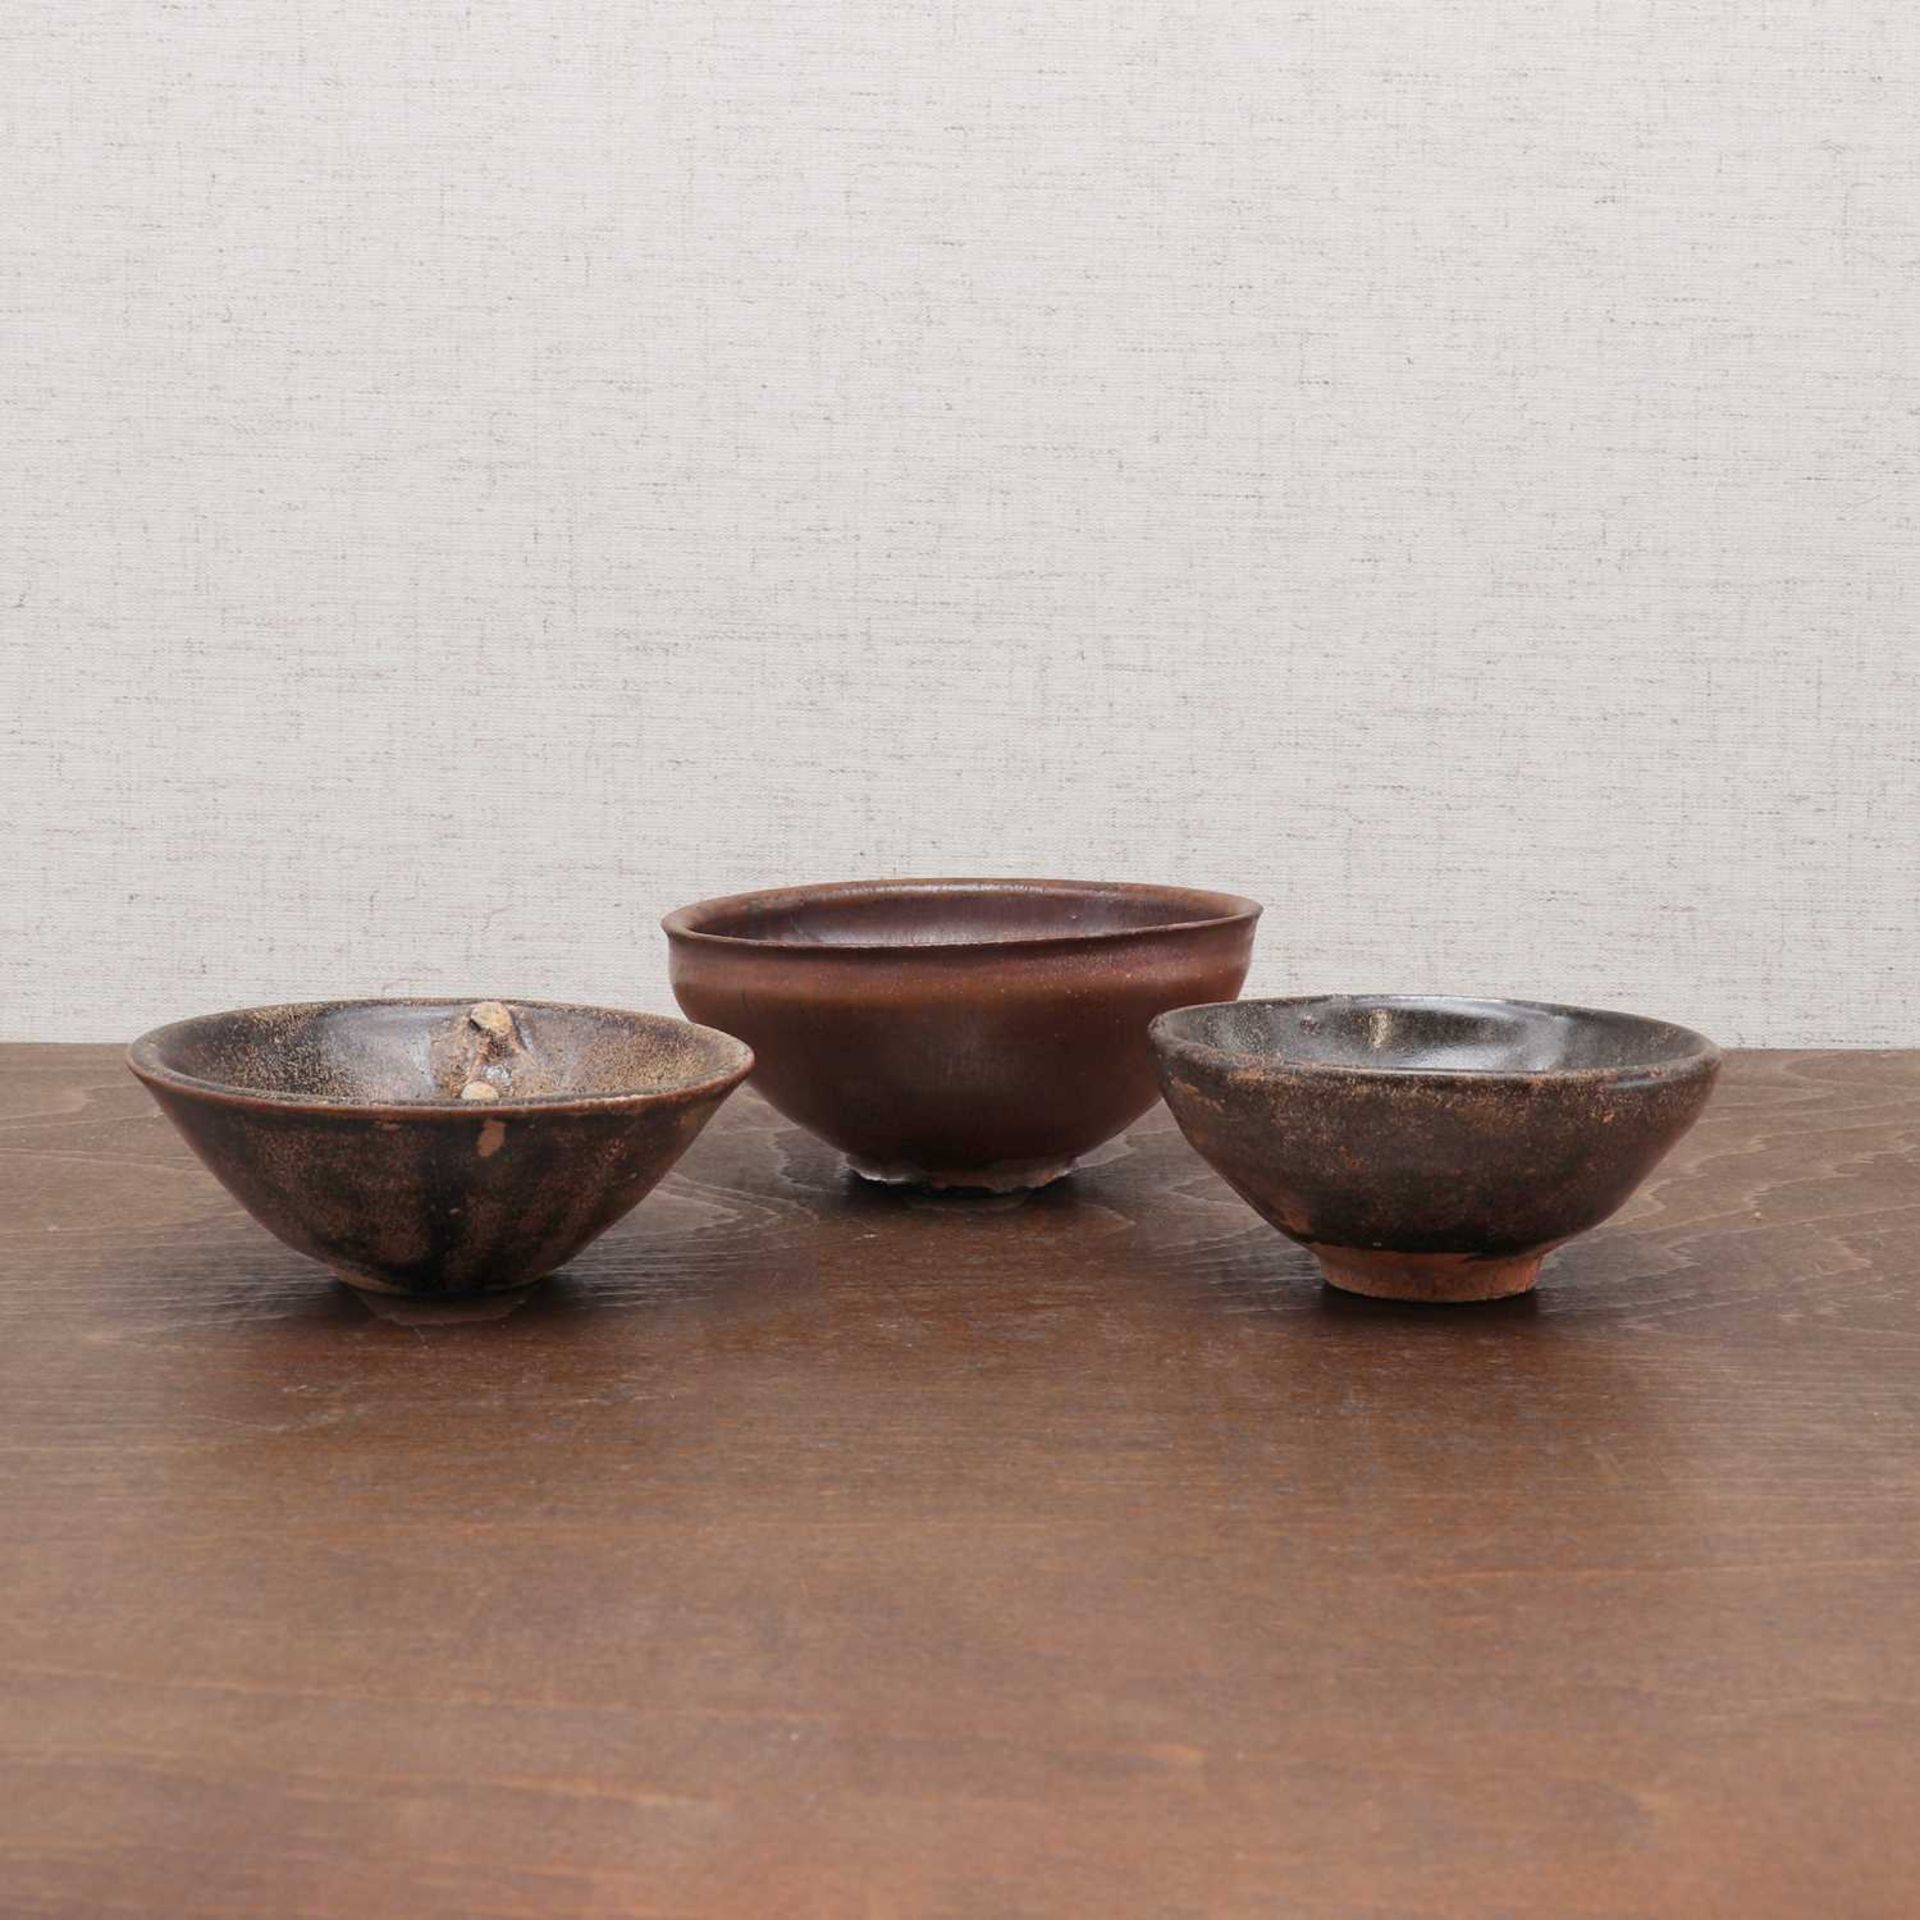 Two Chinese Jian ware tea bowls, - Image 2 of 5